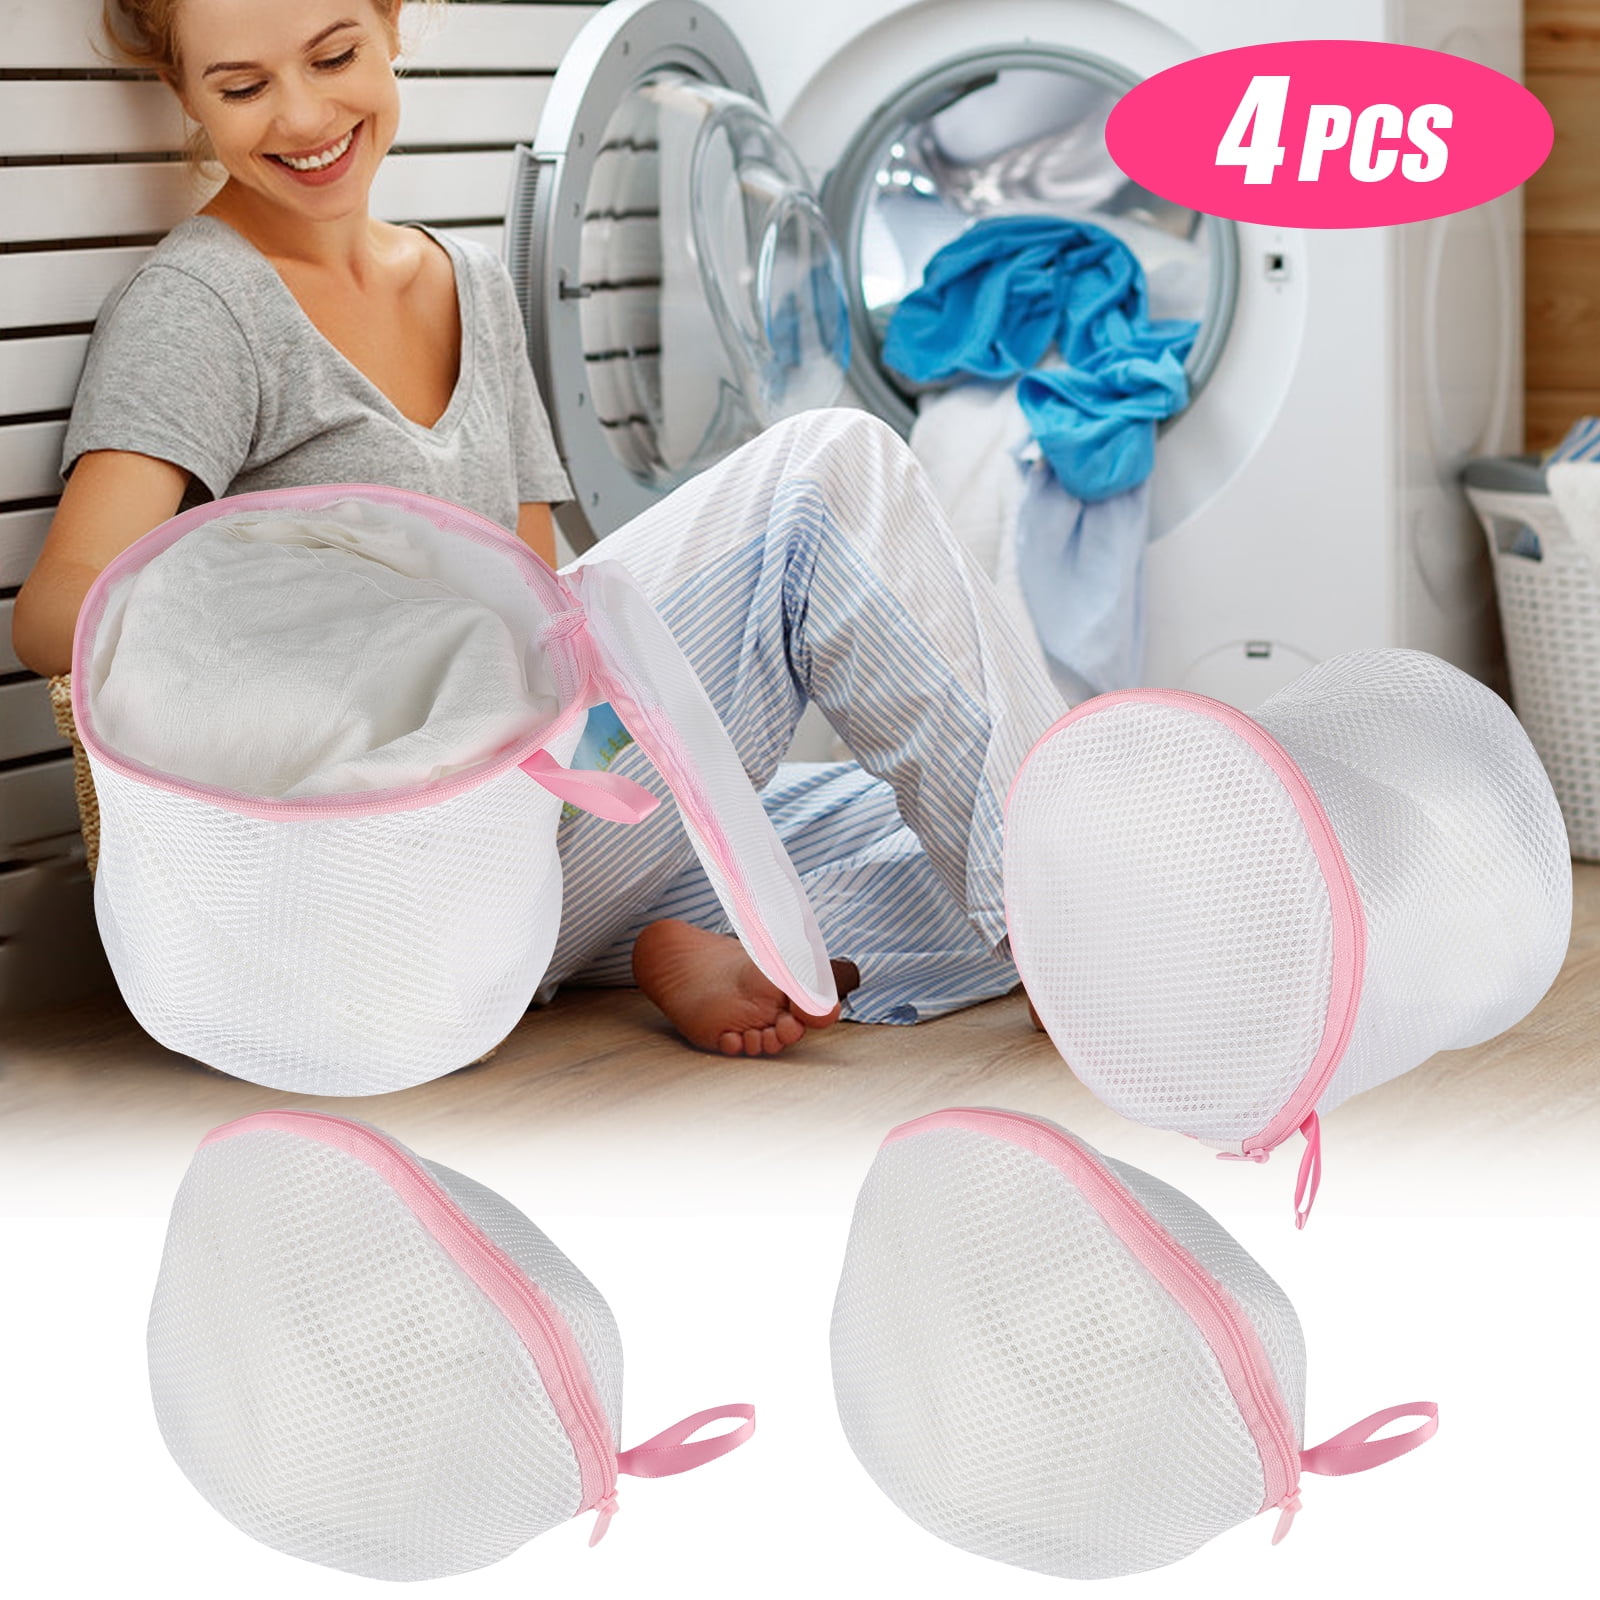 Dual Ball Bubble Bra Saver Hot Washers Laundry Washing Double Machine Protector 